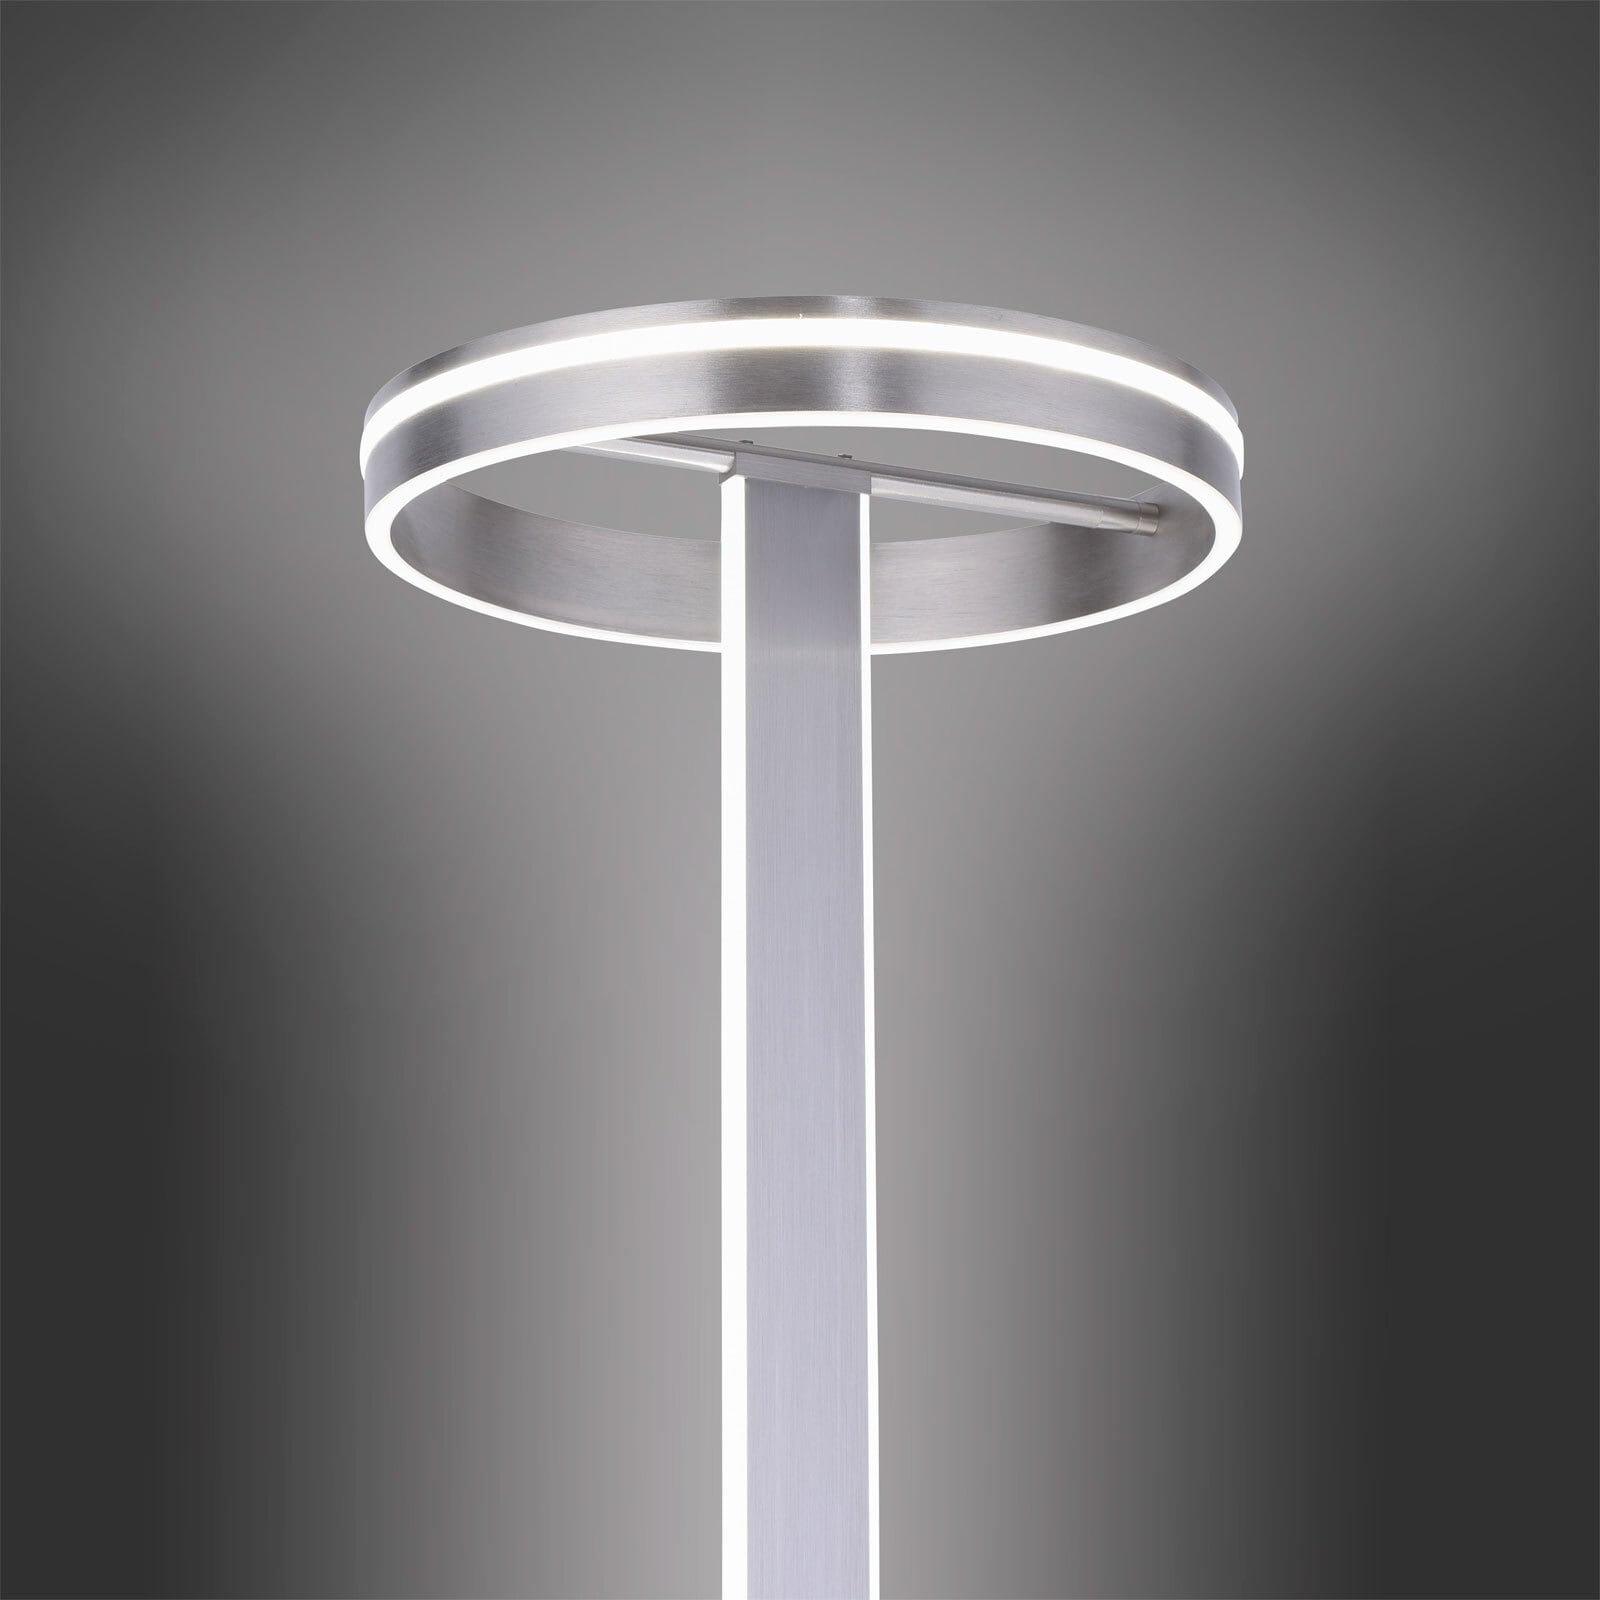 Paul Neuhaus Smart Home LED Stehlampe Q-VITO nickelfarbig